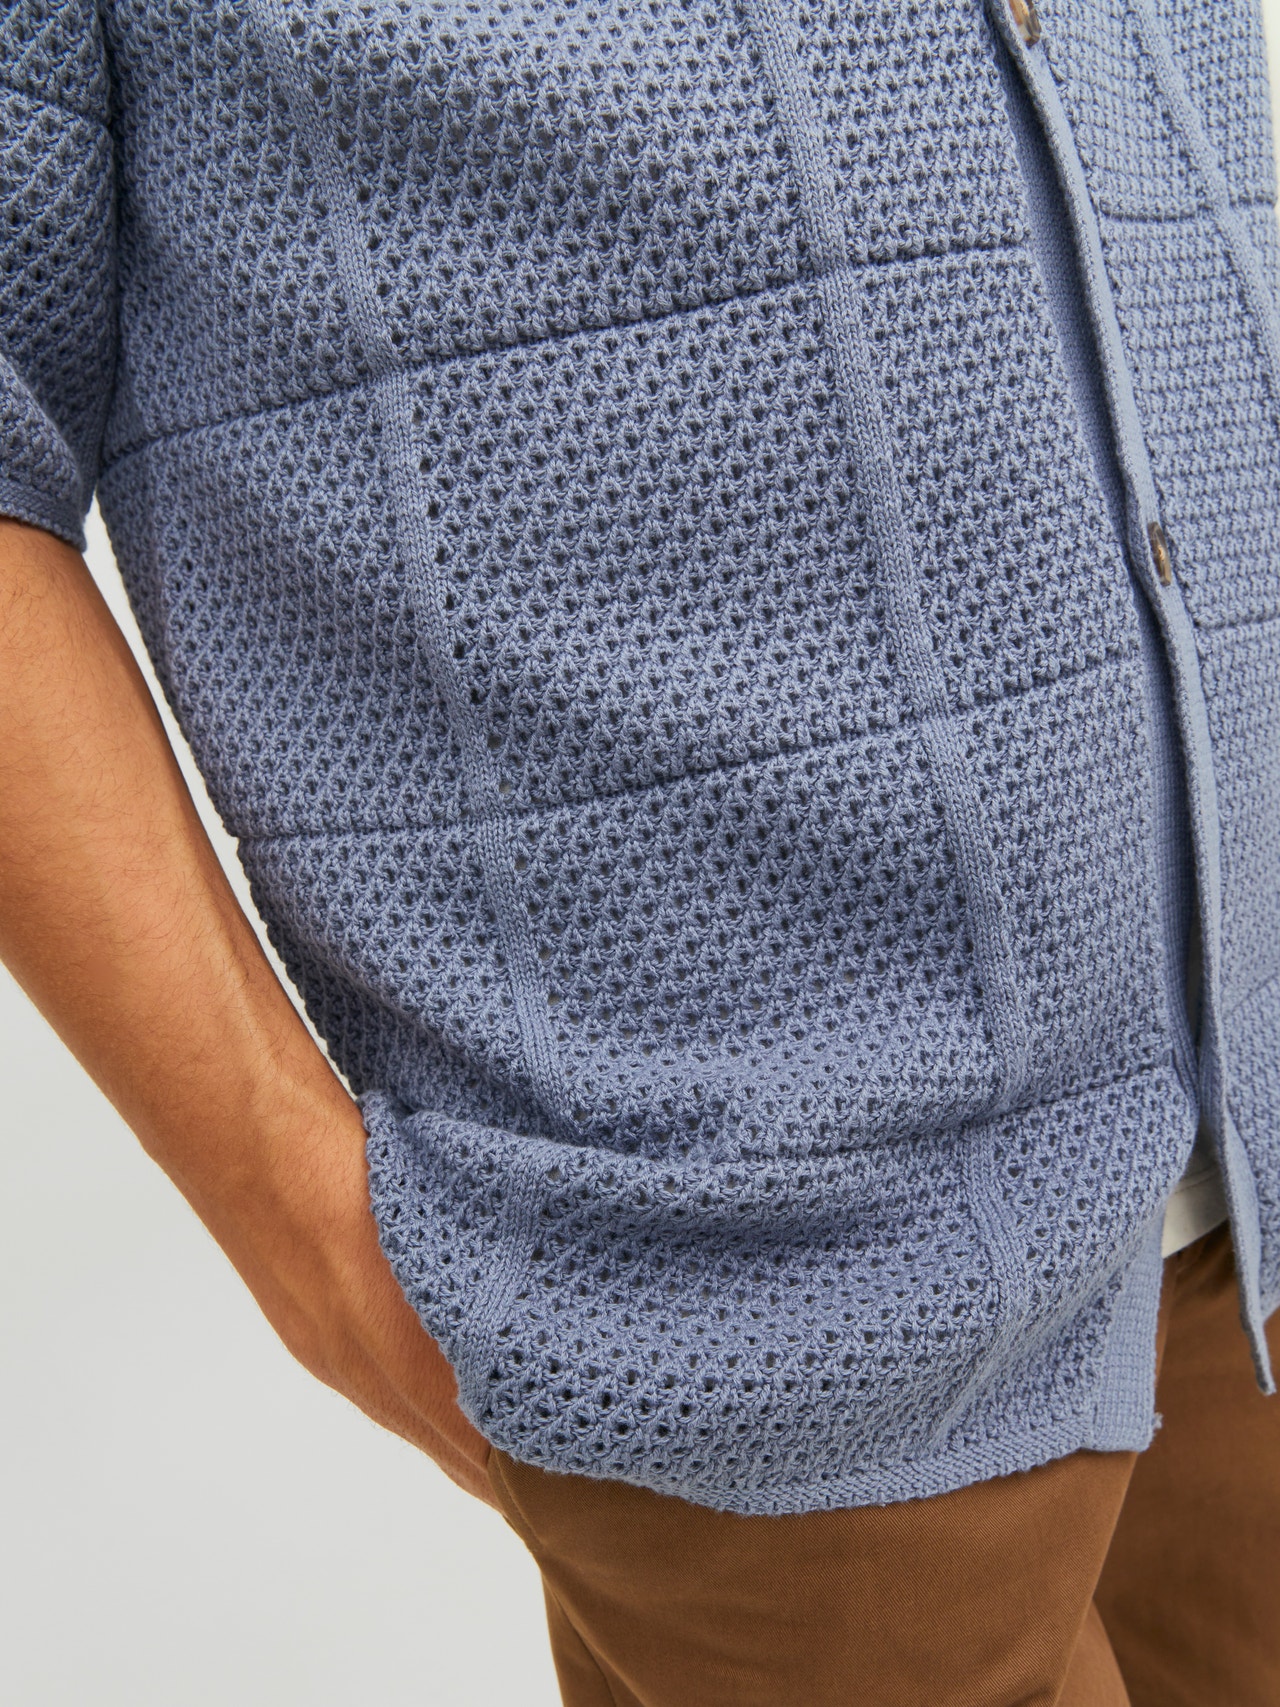 Jack & Jones Regular Fit Uformell skjorte -Blue Mirage - 12240639